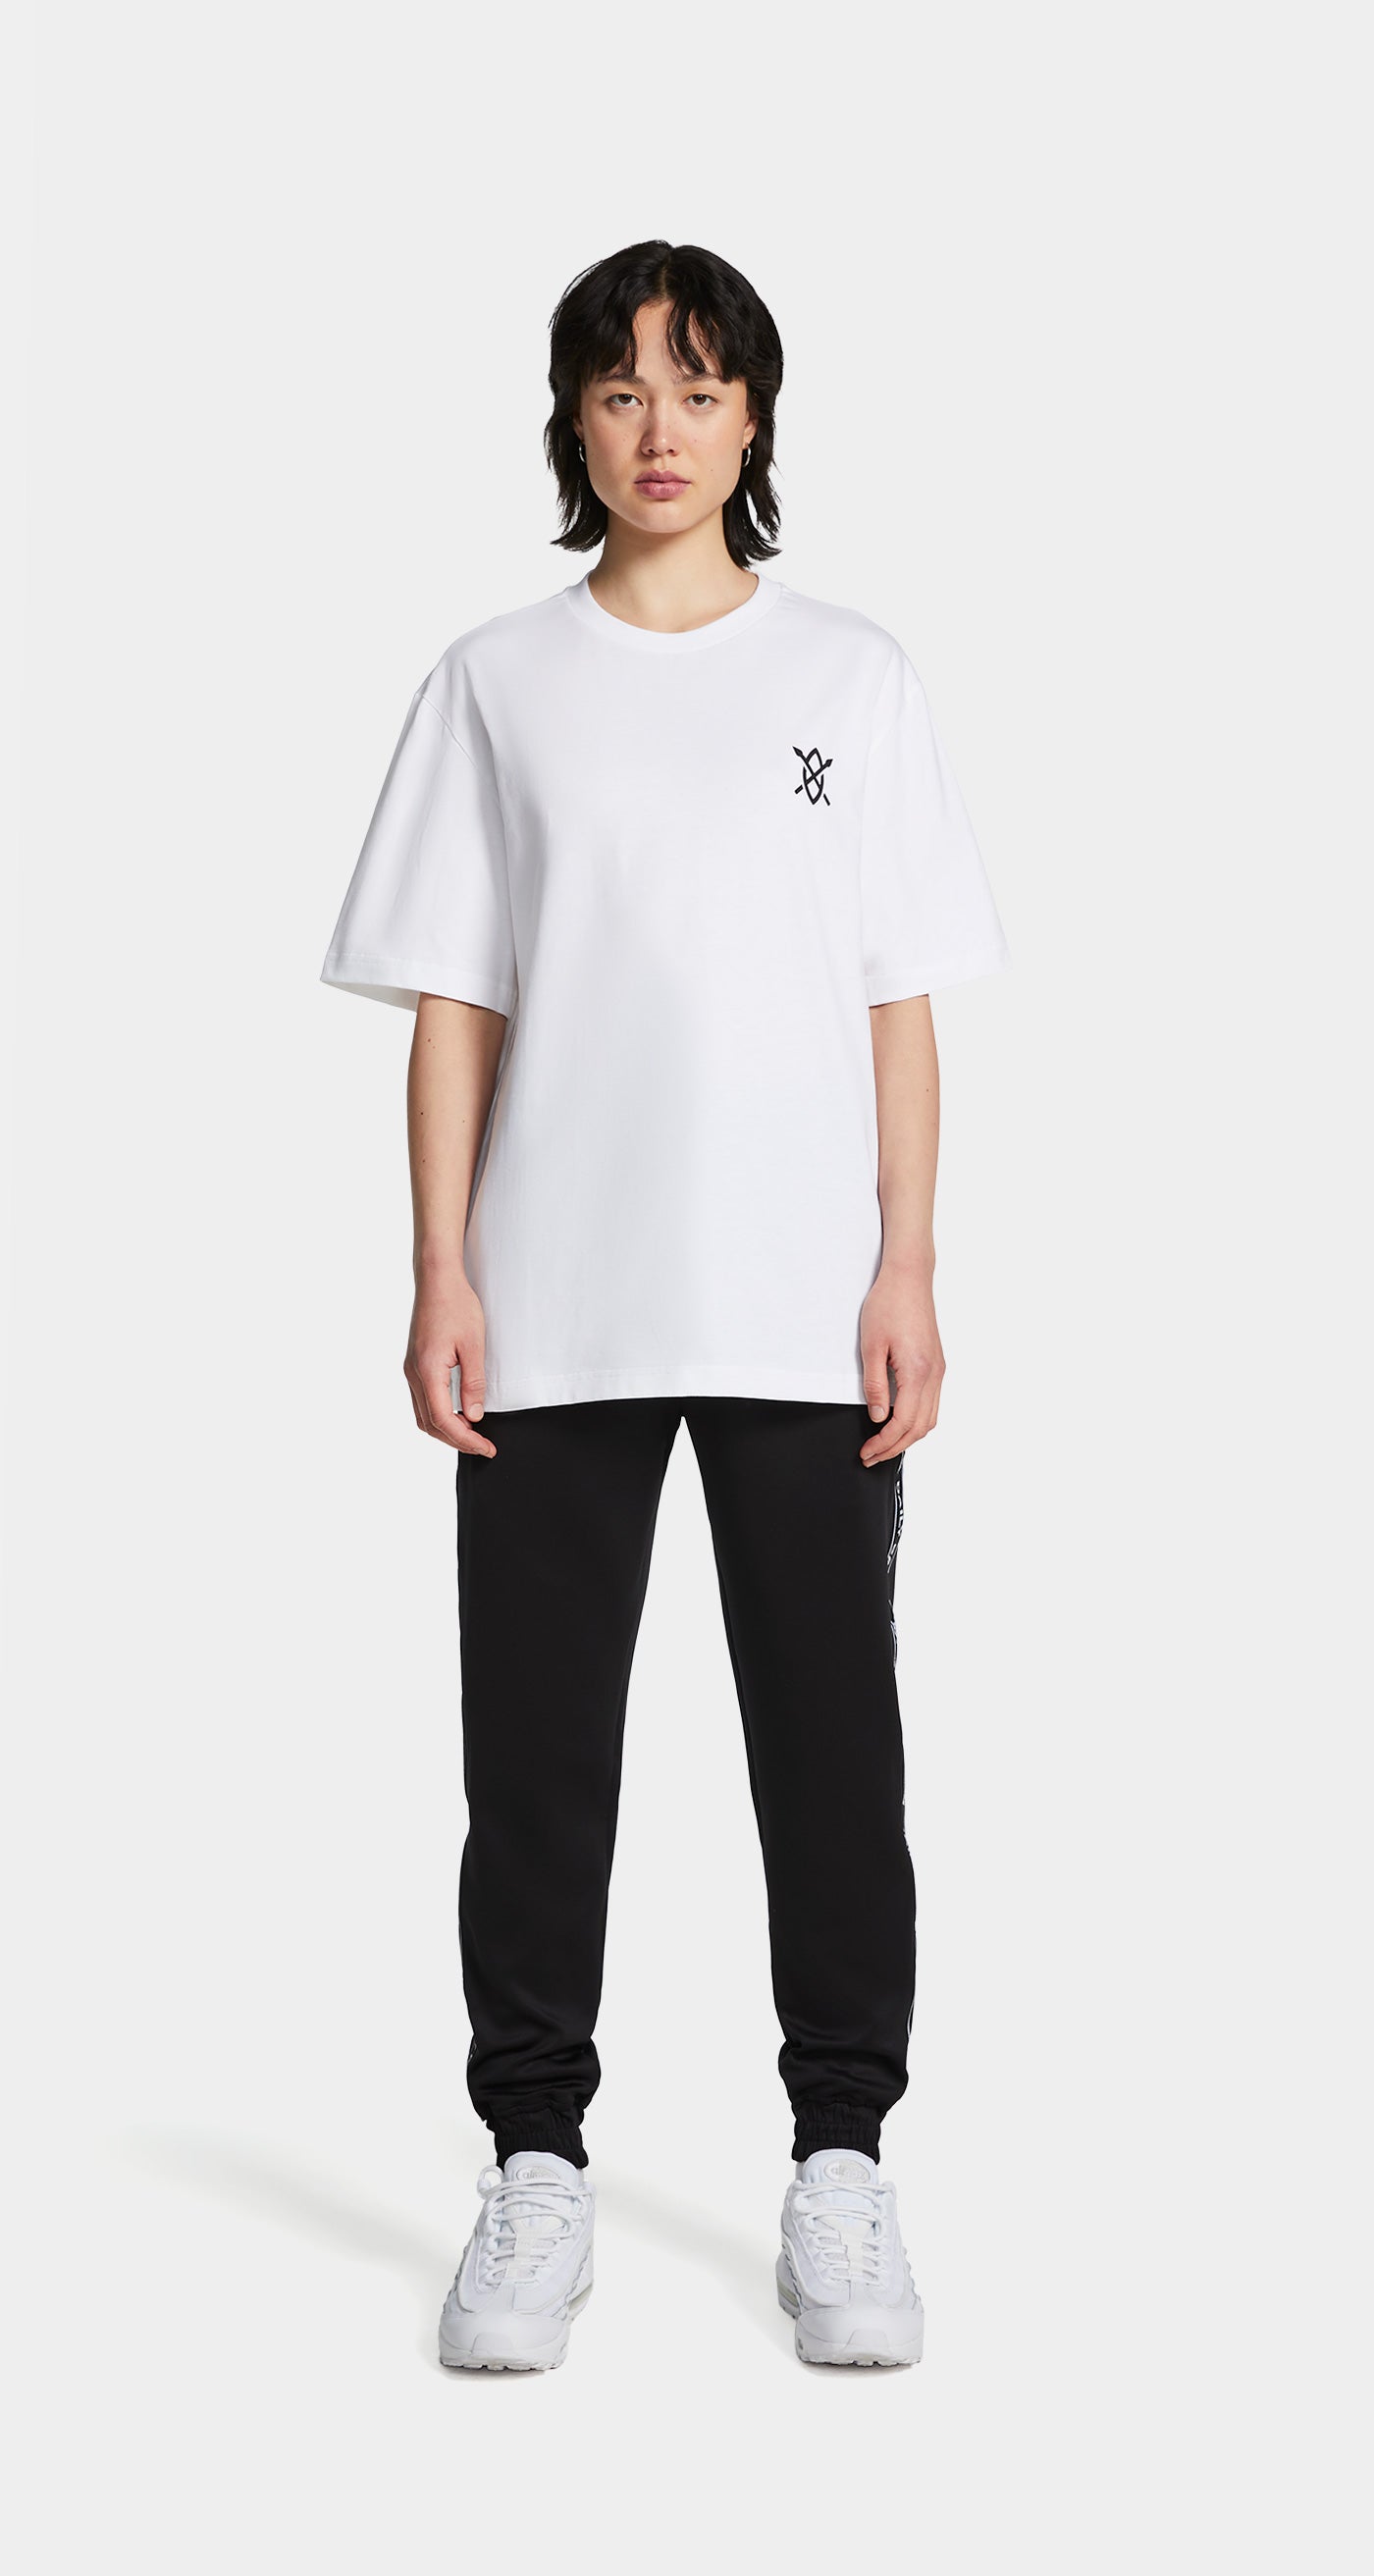 DP - White Black London Flagship Store T-Shirt - Wmn - Front